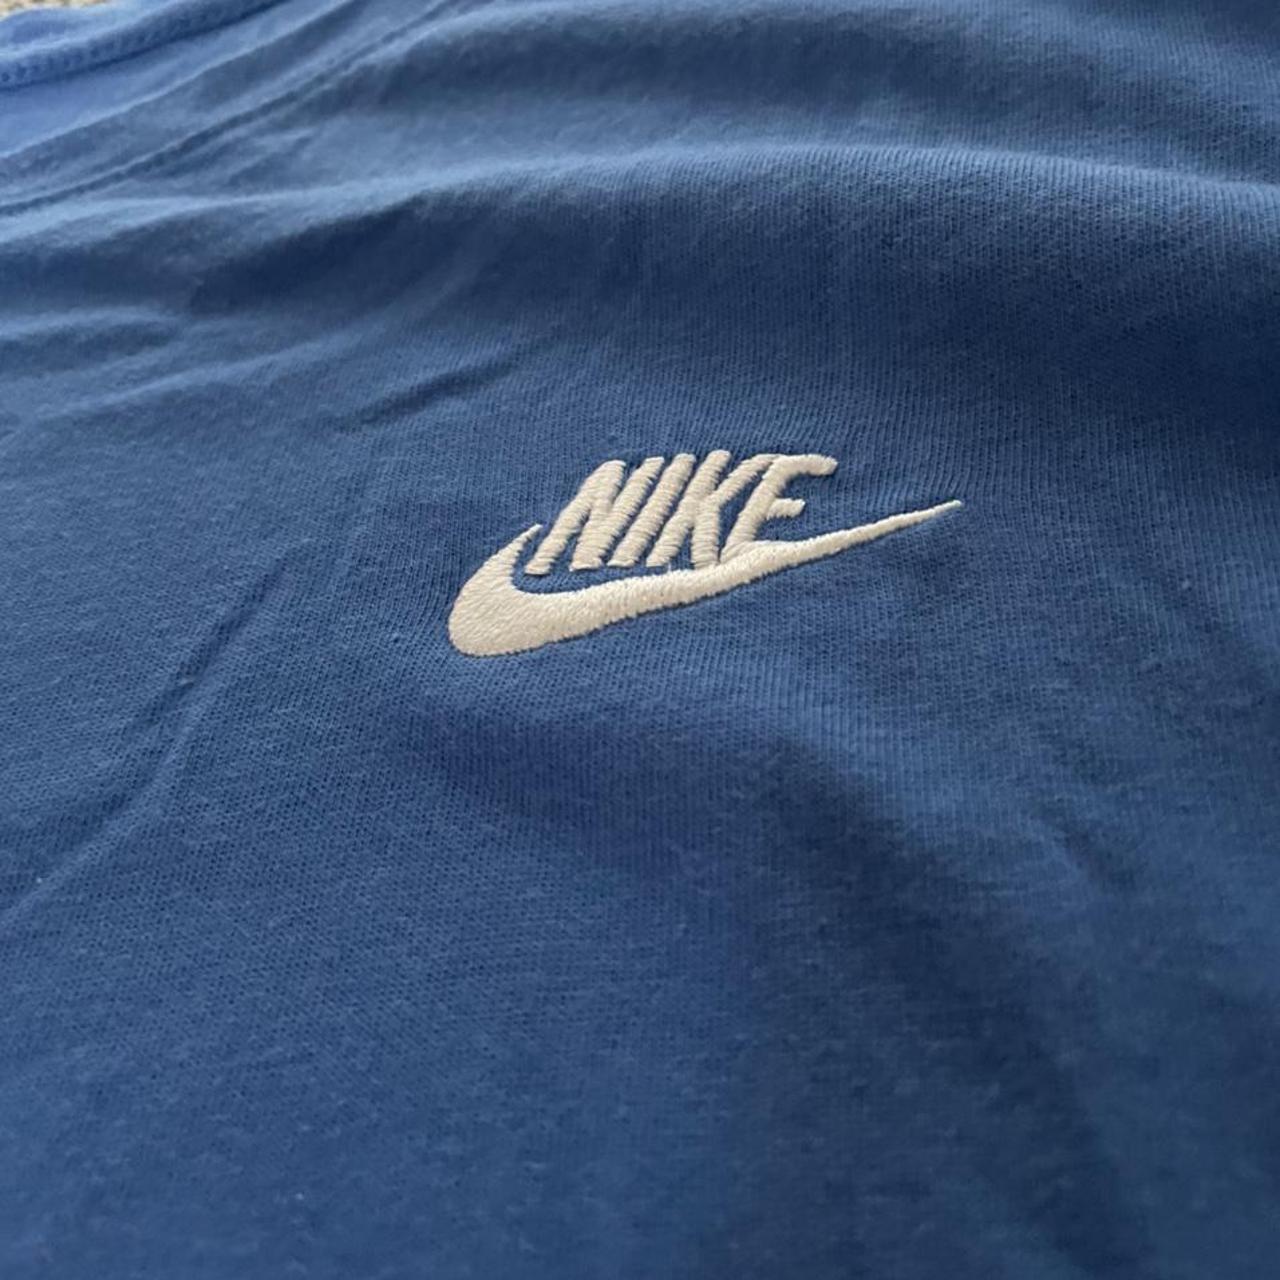 Product Image 3 - Plain Nike logo T-shirt 
No